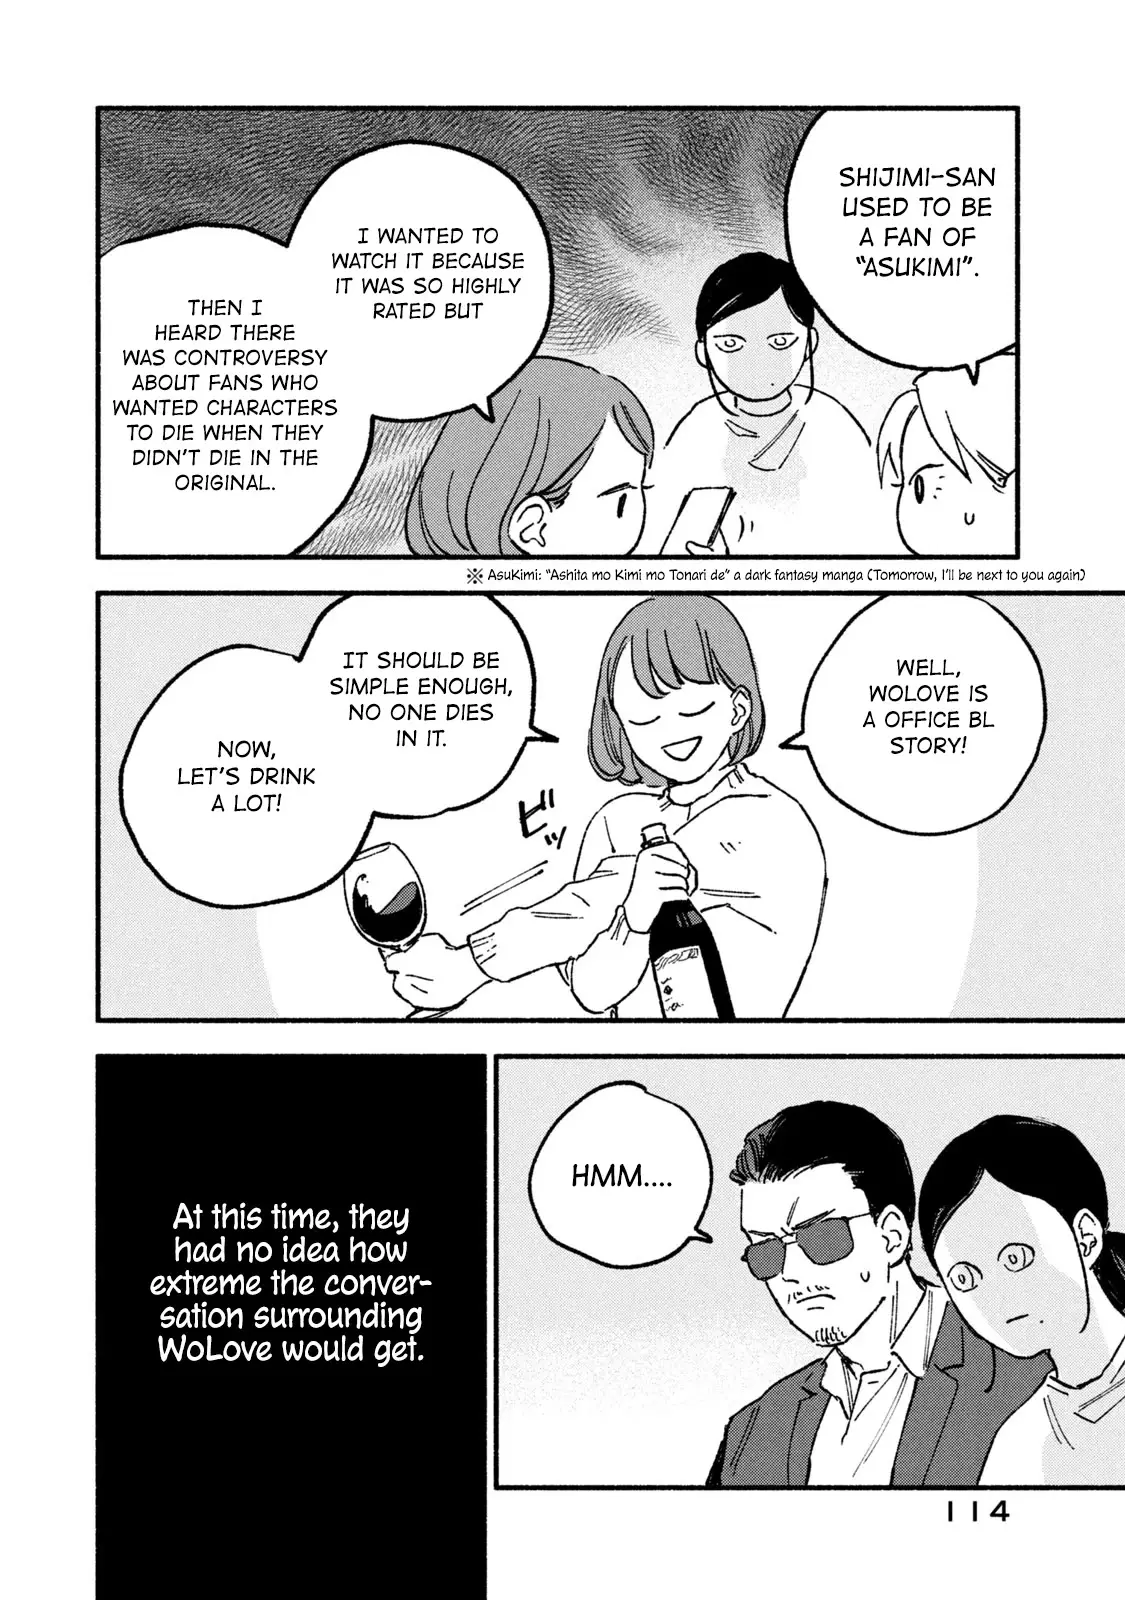 A Story About An Offline Meet-Up Between An Otaku And A Yakuza - 12 page 8-2084b795